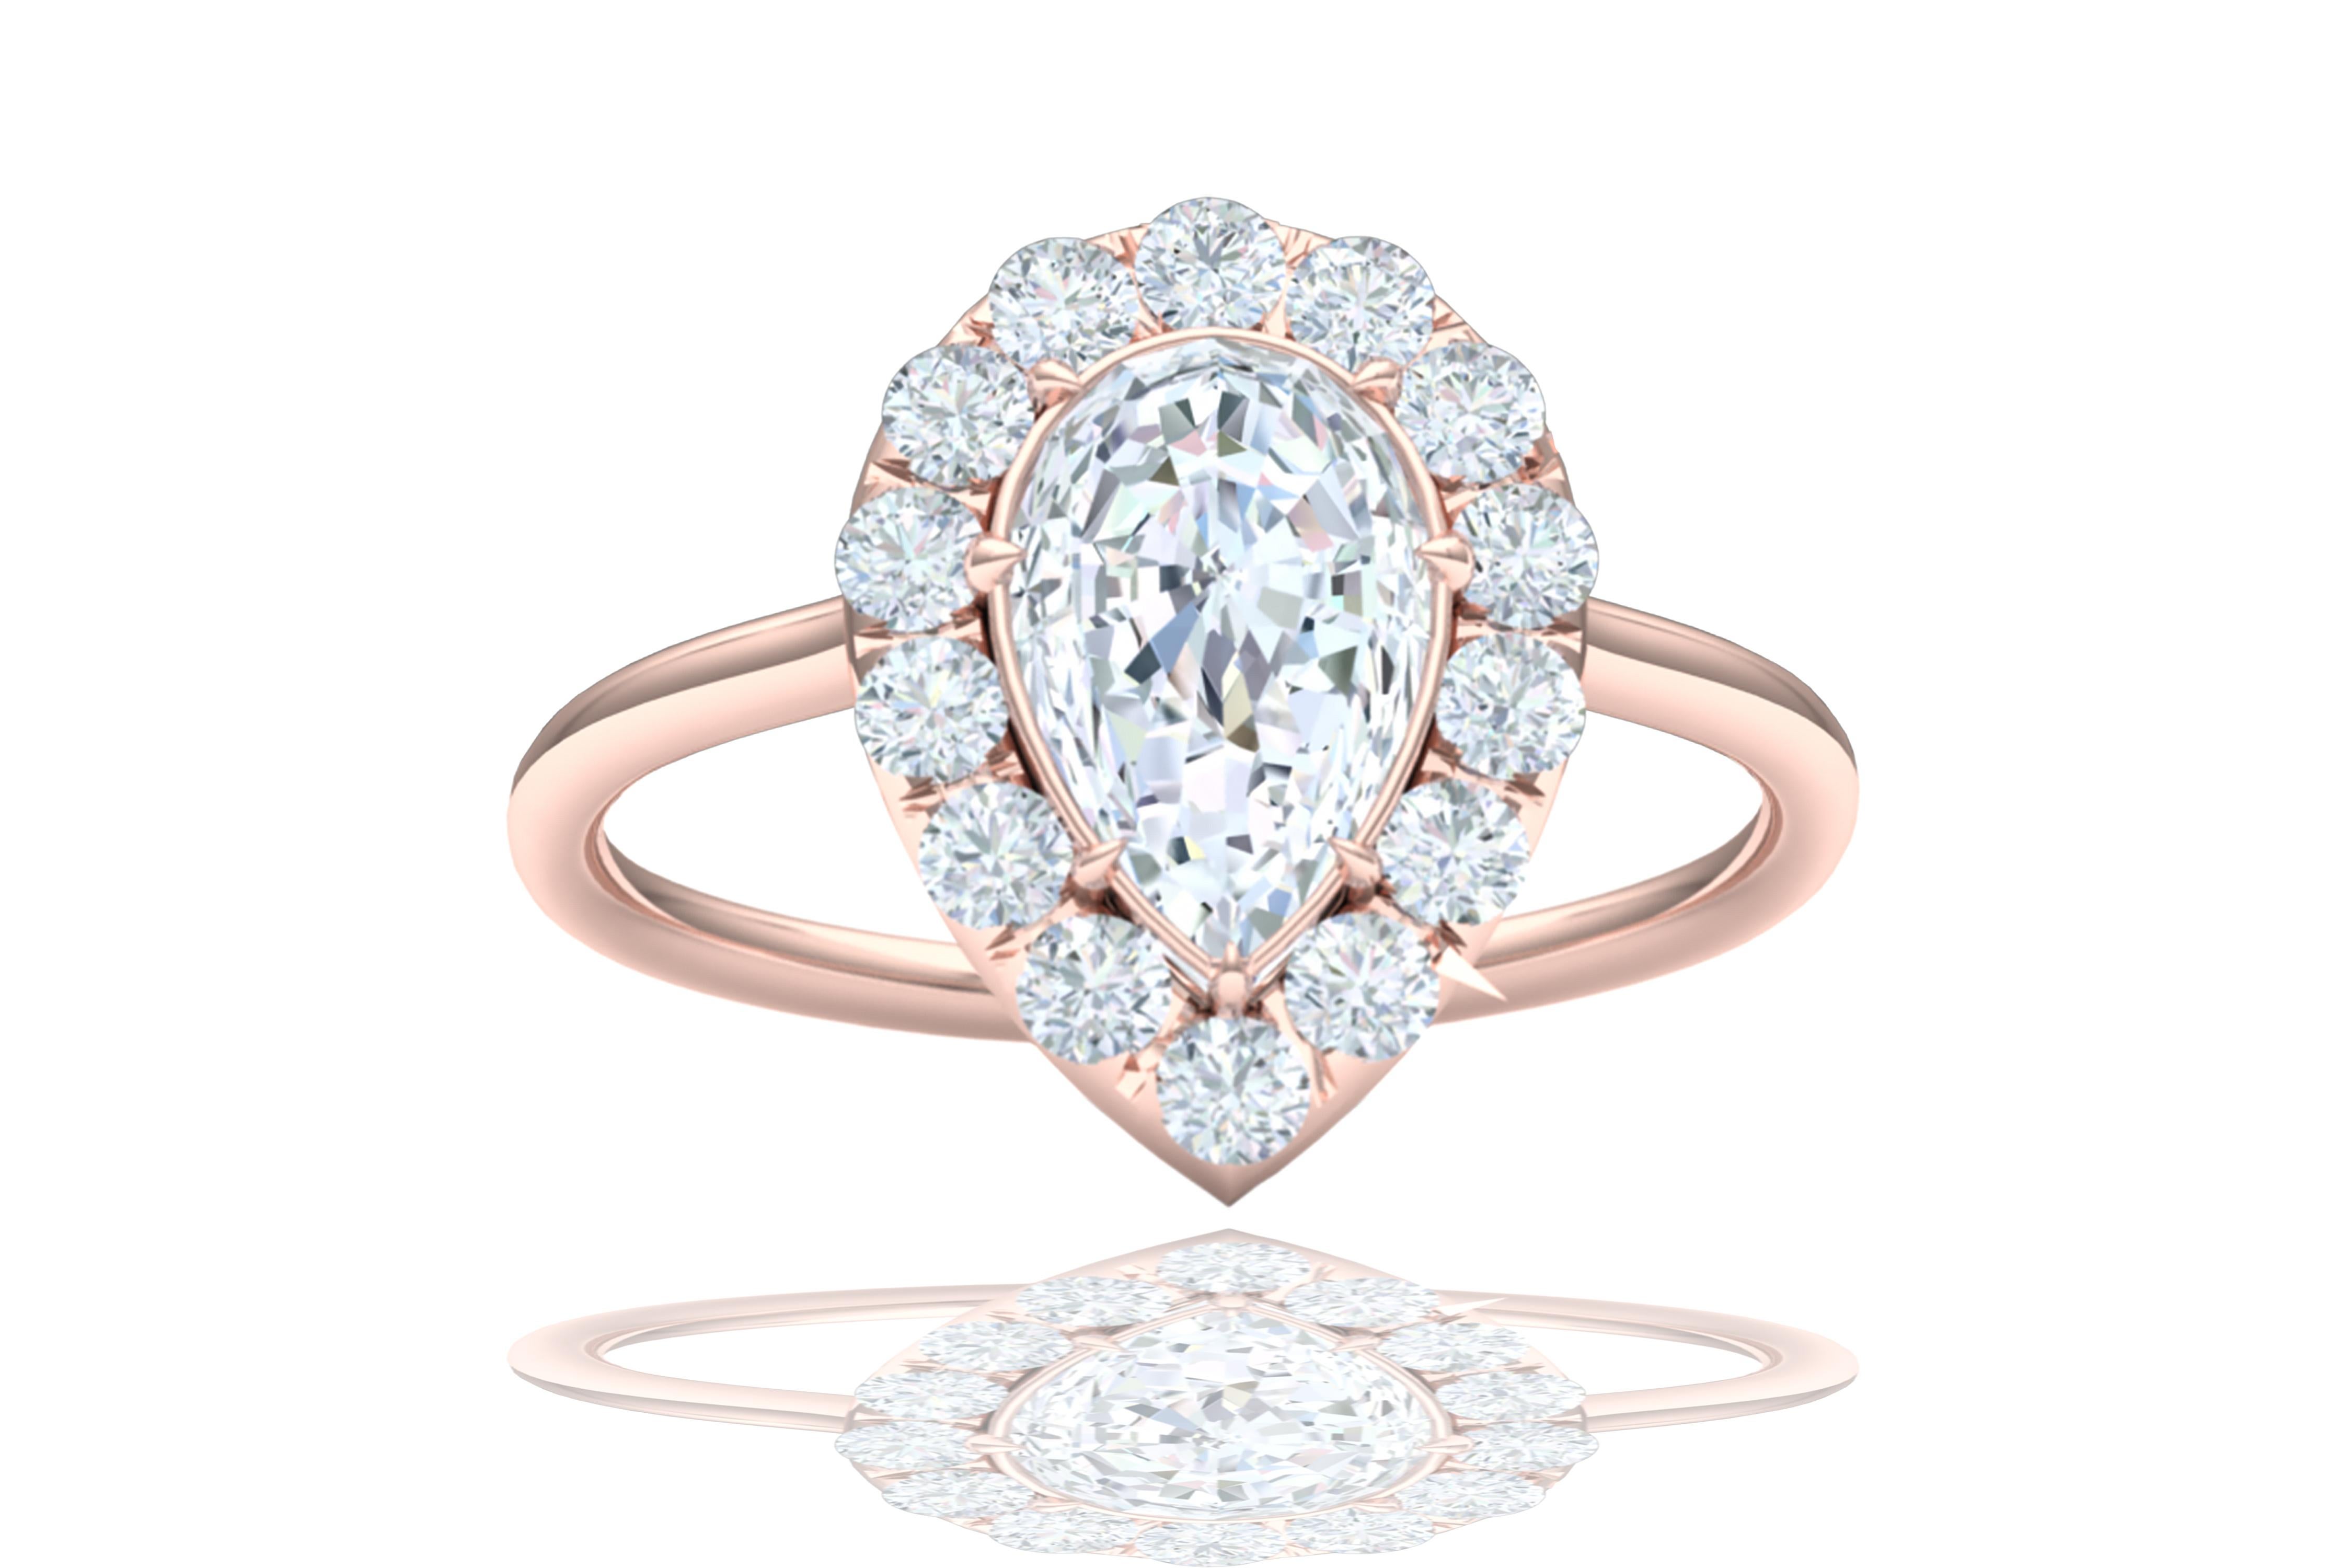 1 carat pear-shaped diamond ring rose gold